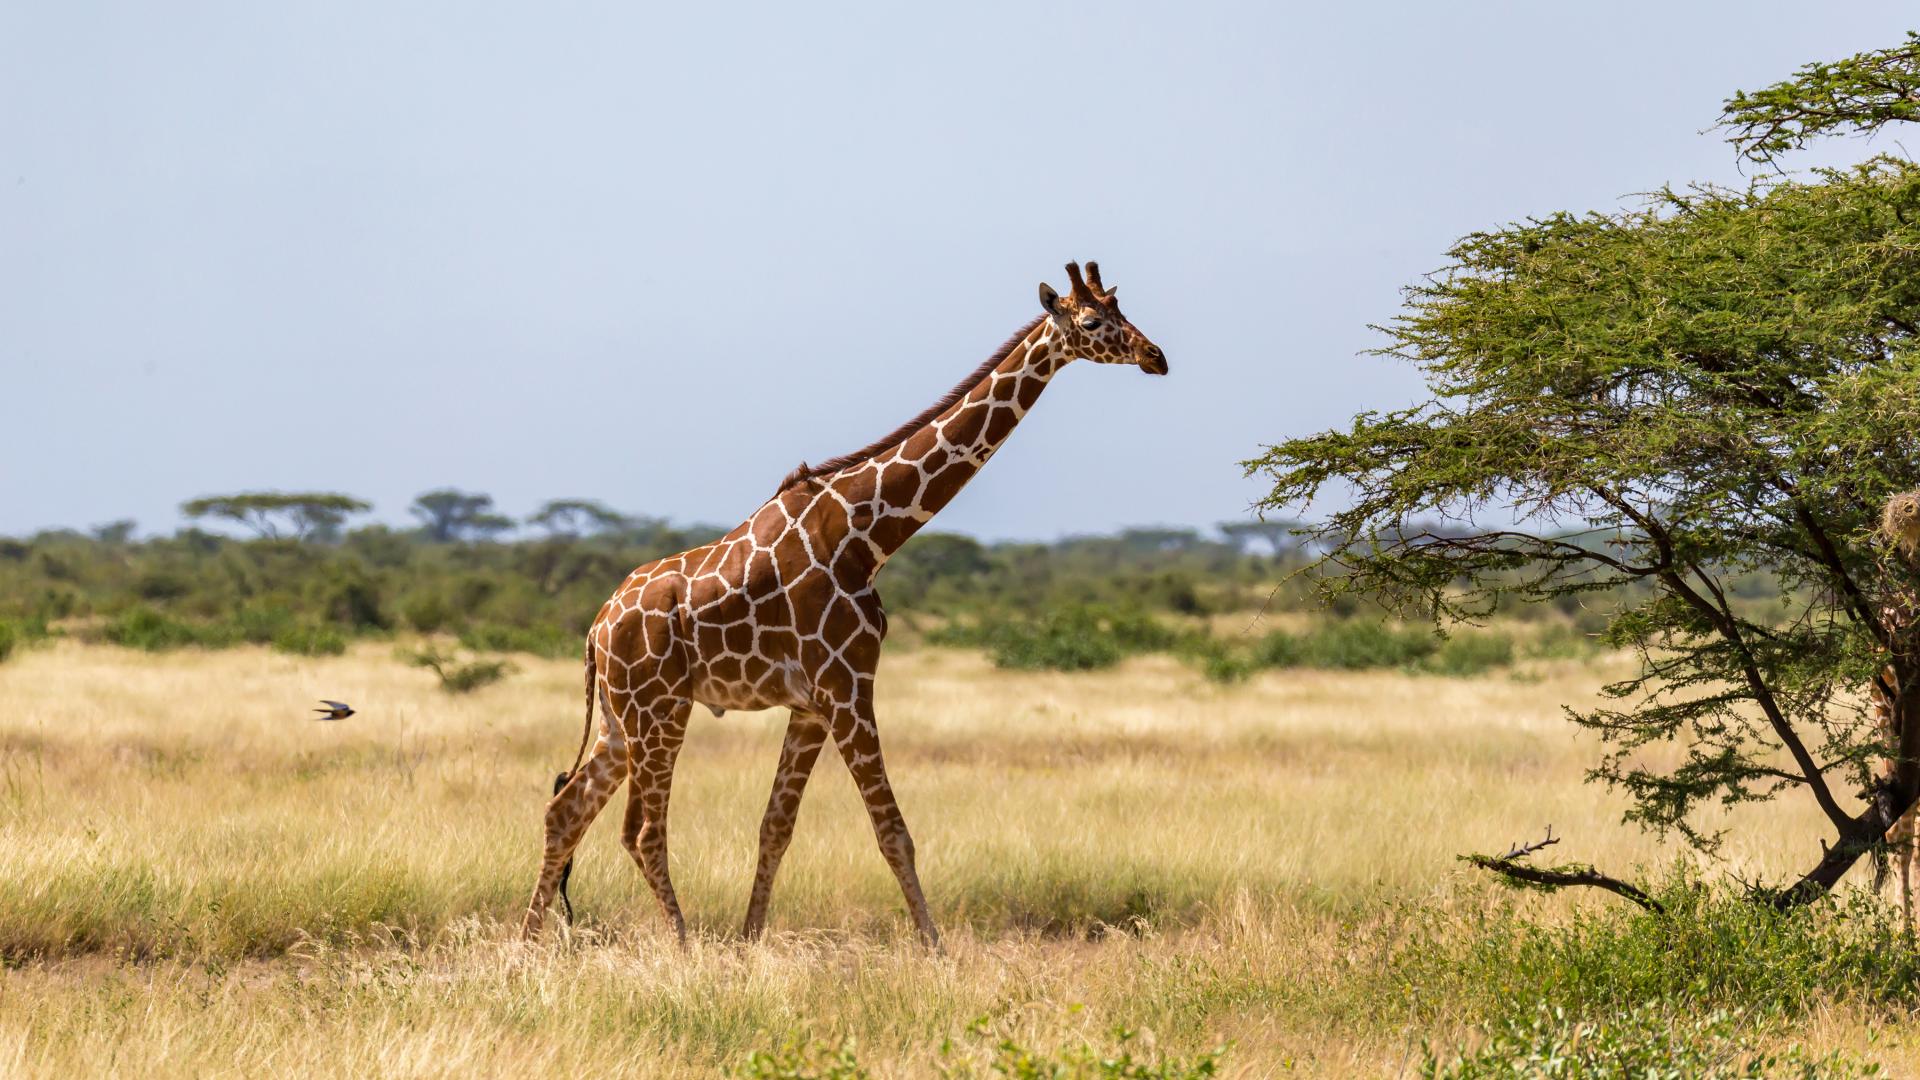 Wild giraffe in Africa  